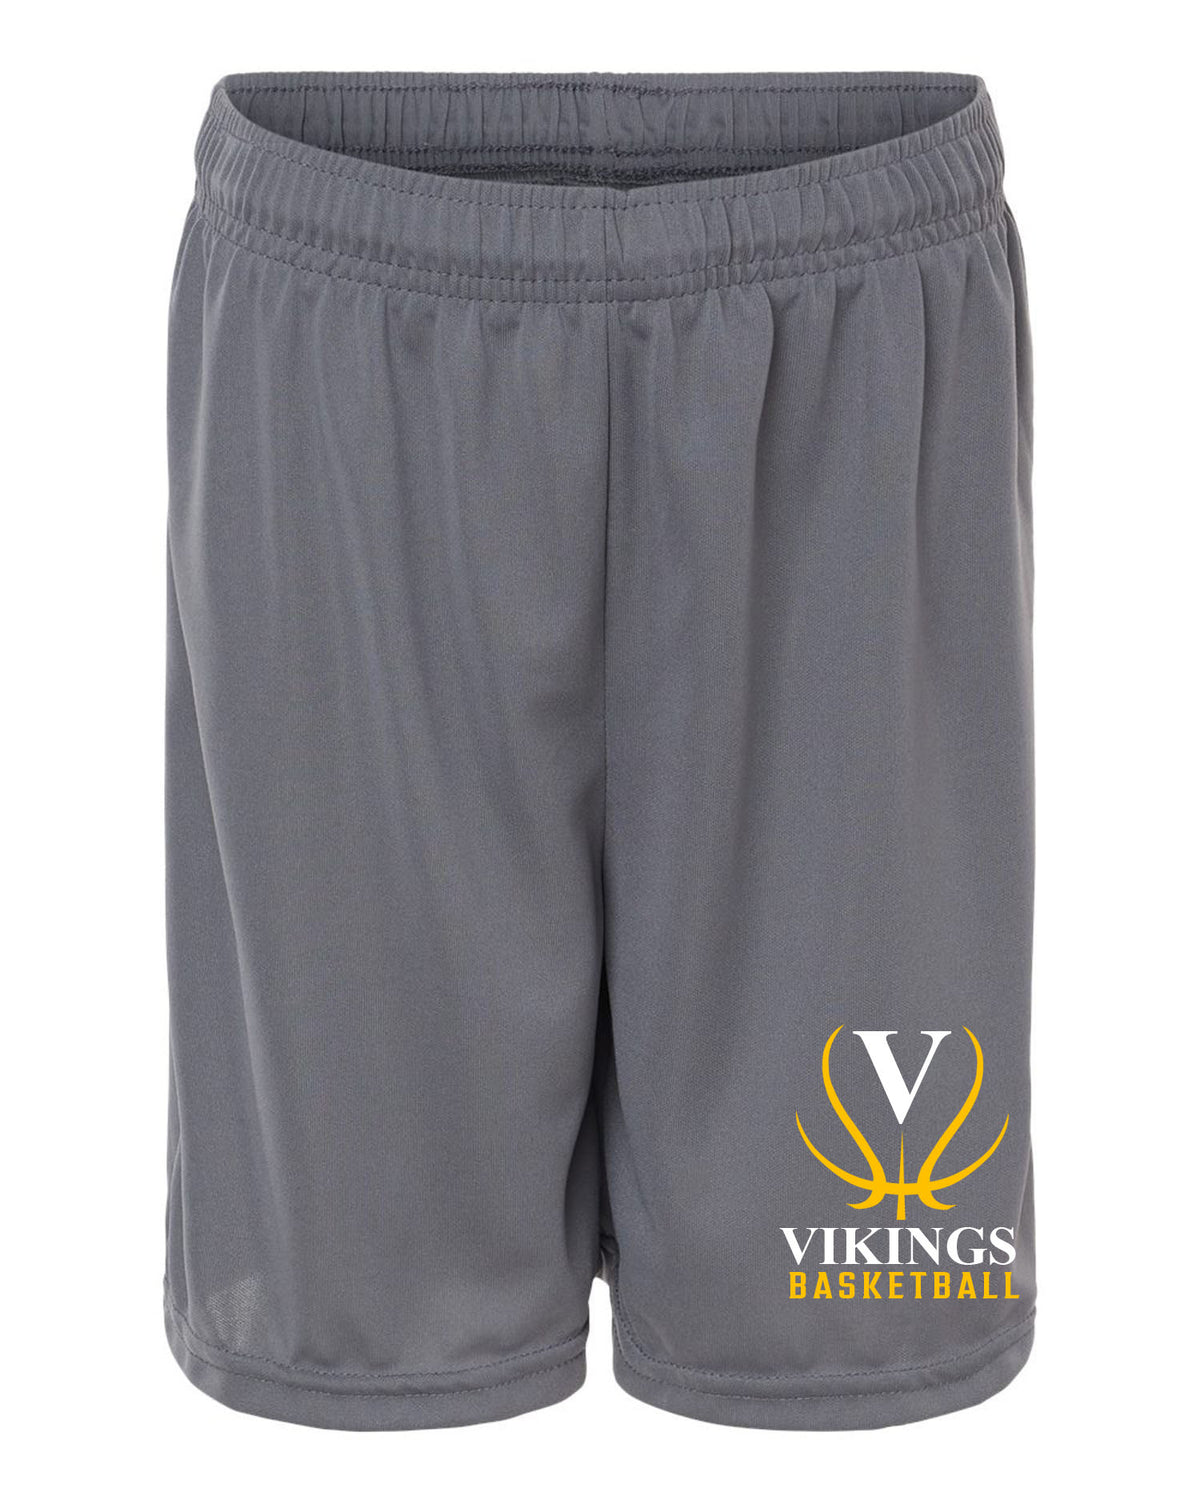 Vikings Basketball Performance Shorts Design 3